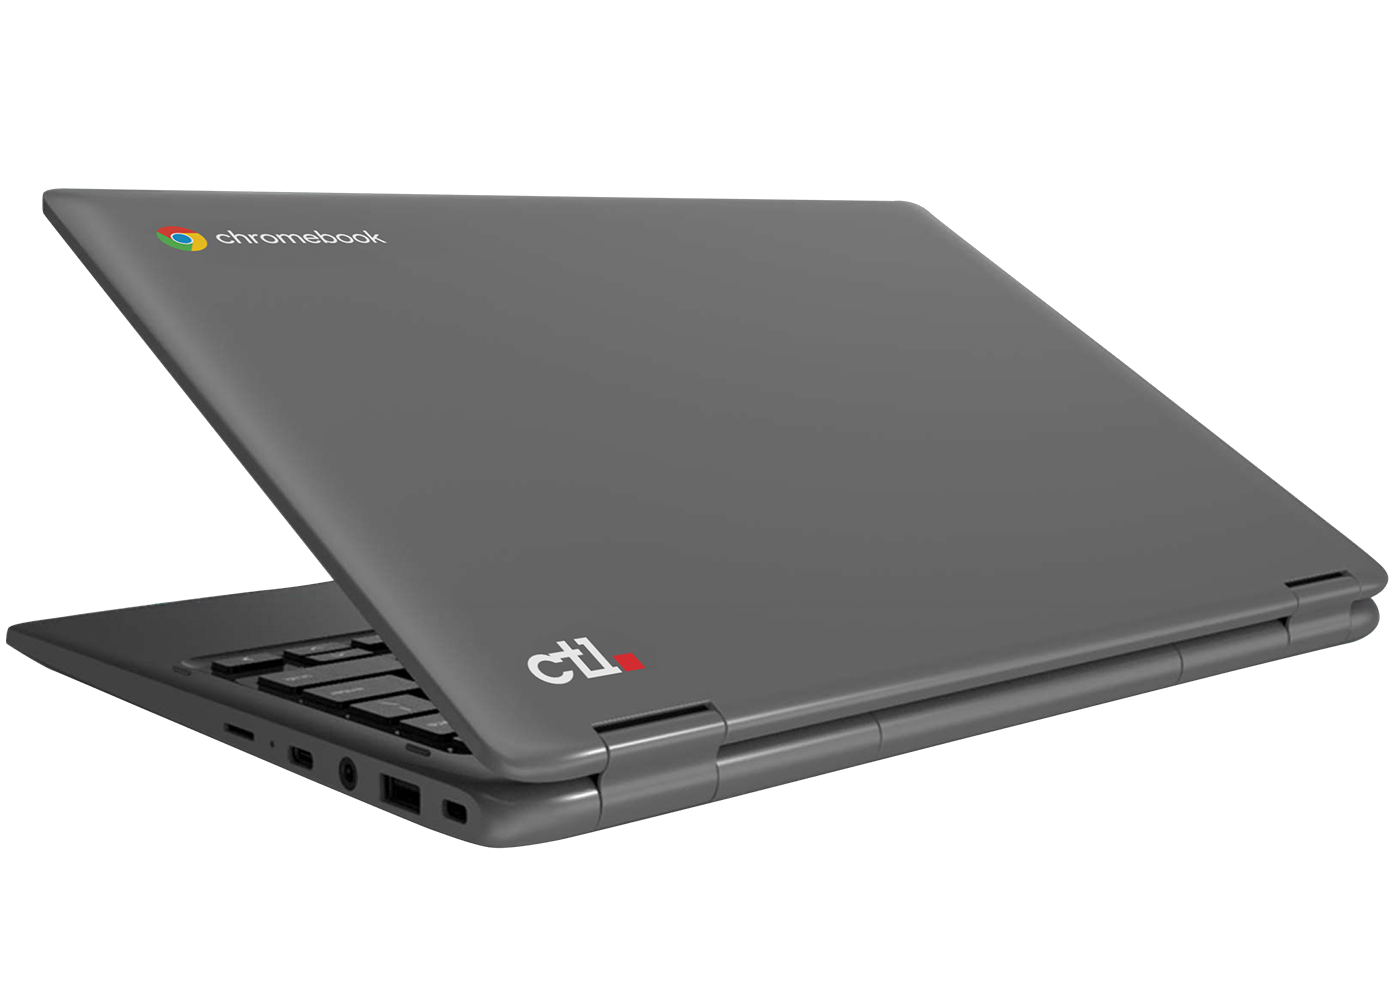 CTL Chromebook NL73 Series (Brookfield Academy Configuration) | #4067